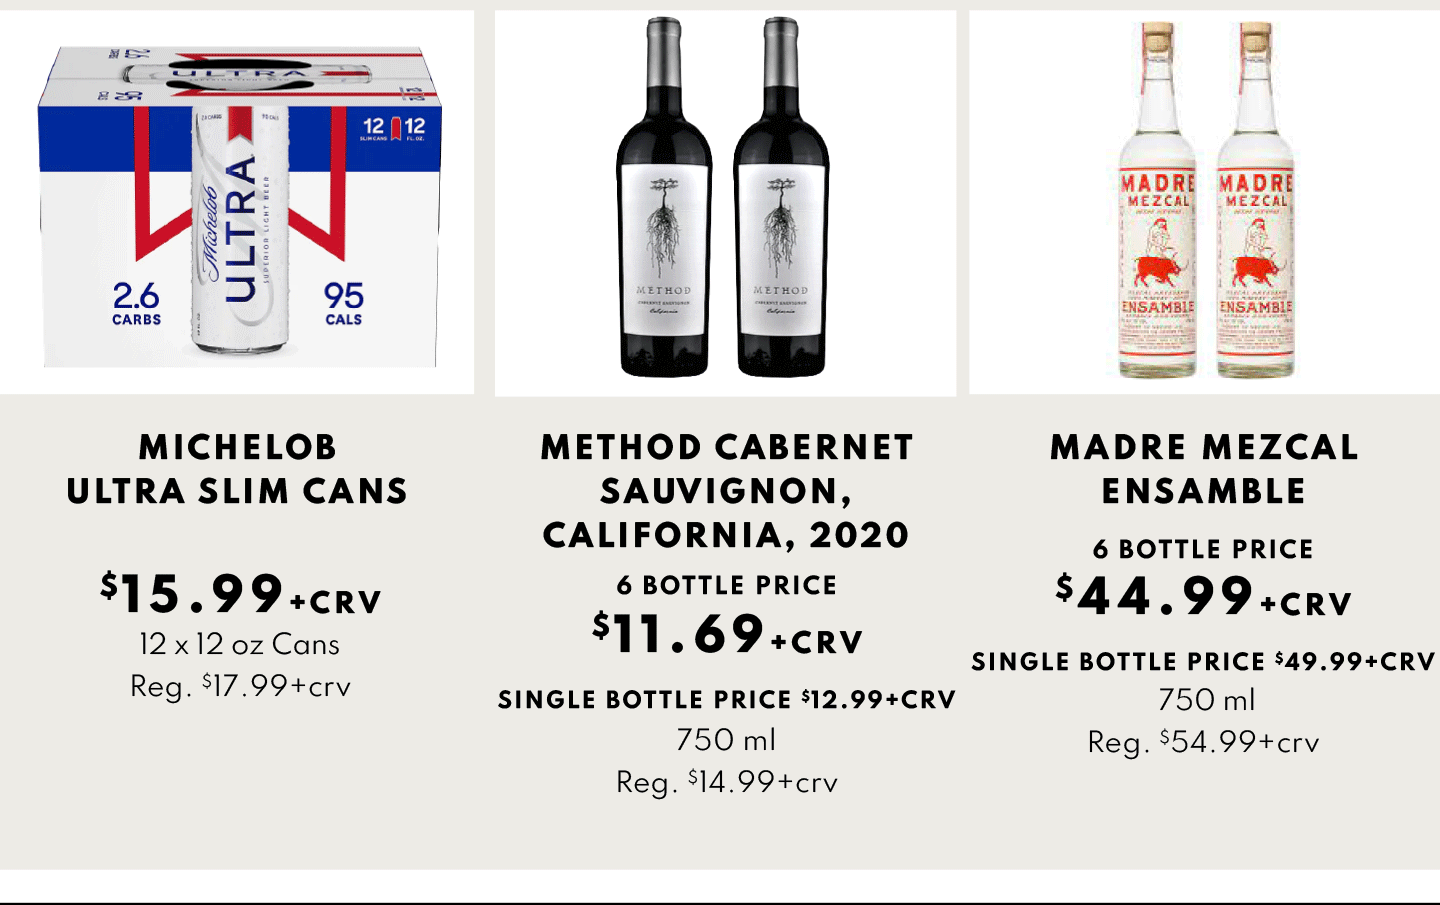 Michelob Ultra Slim Cans $15.99, MEthod CAbernet Sauvignon California, 2020 6 bottle price $11.69 and Madre Mezcal Ensamble 6 bottle PRice $44.99